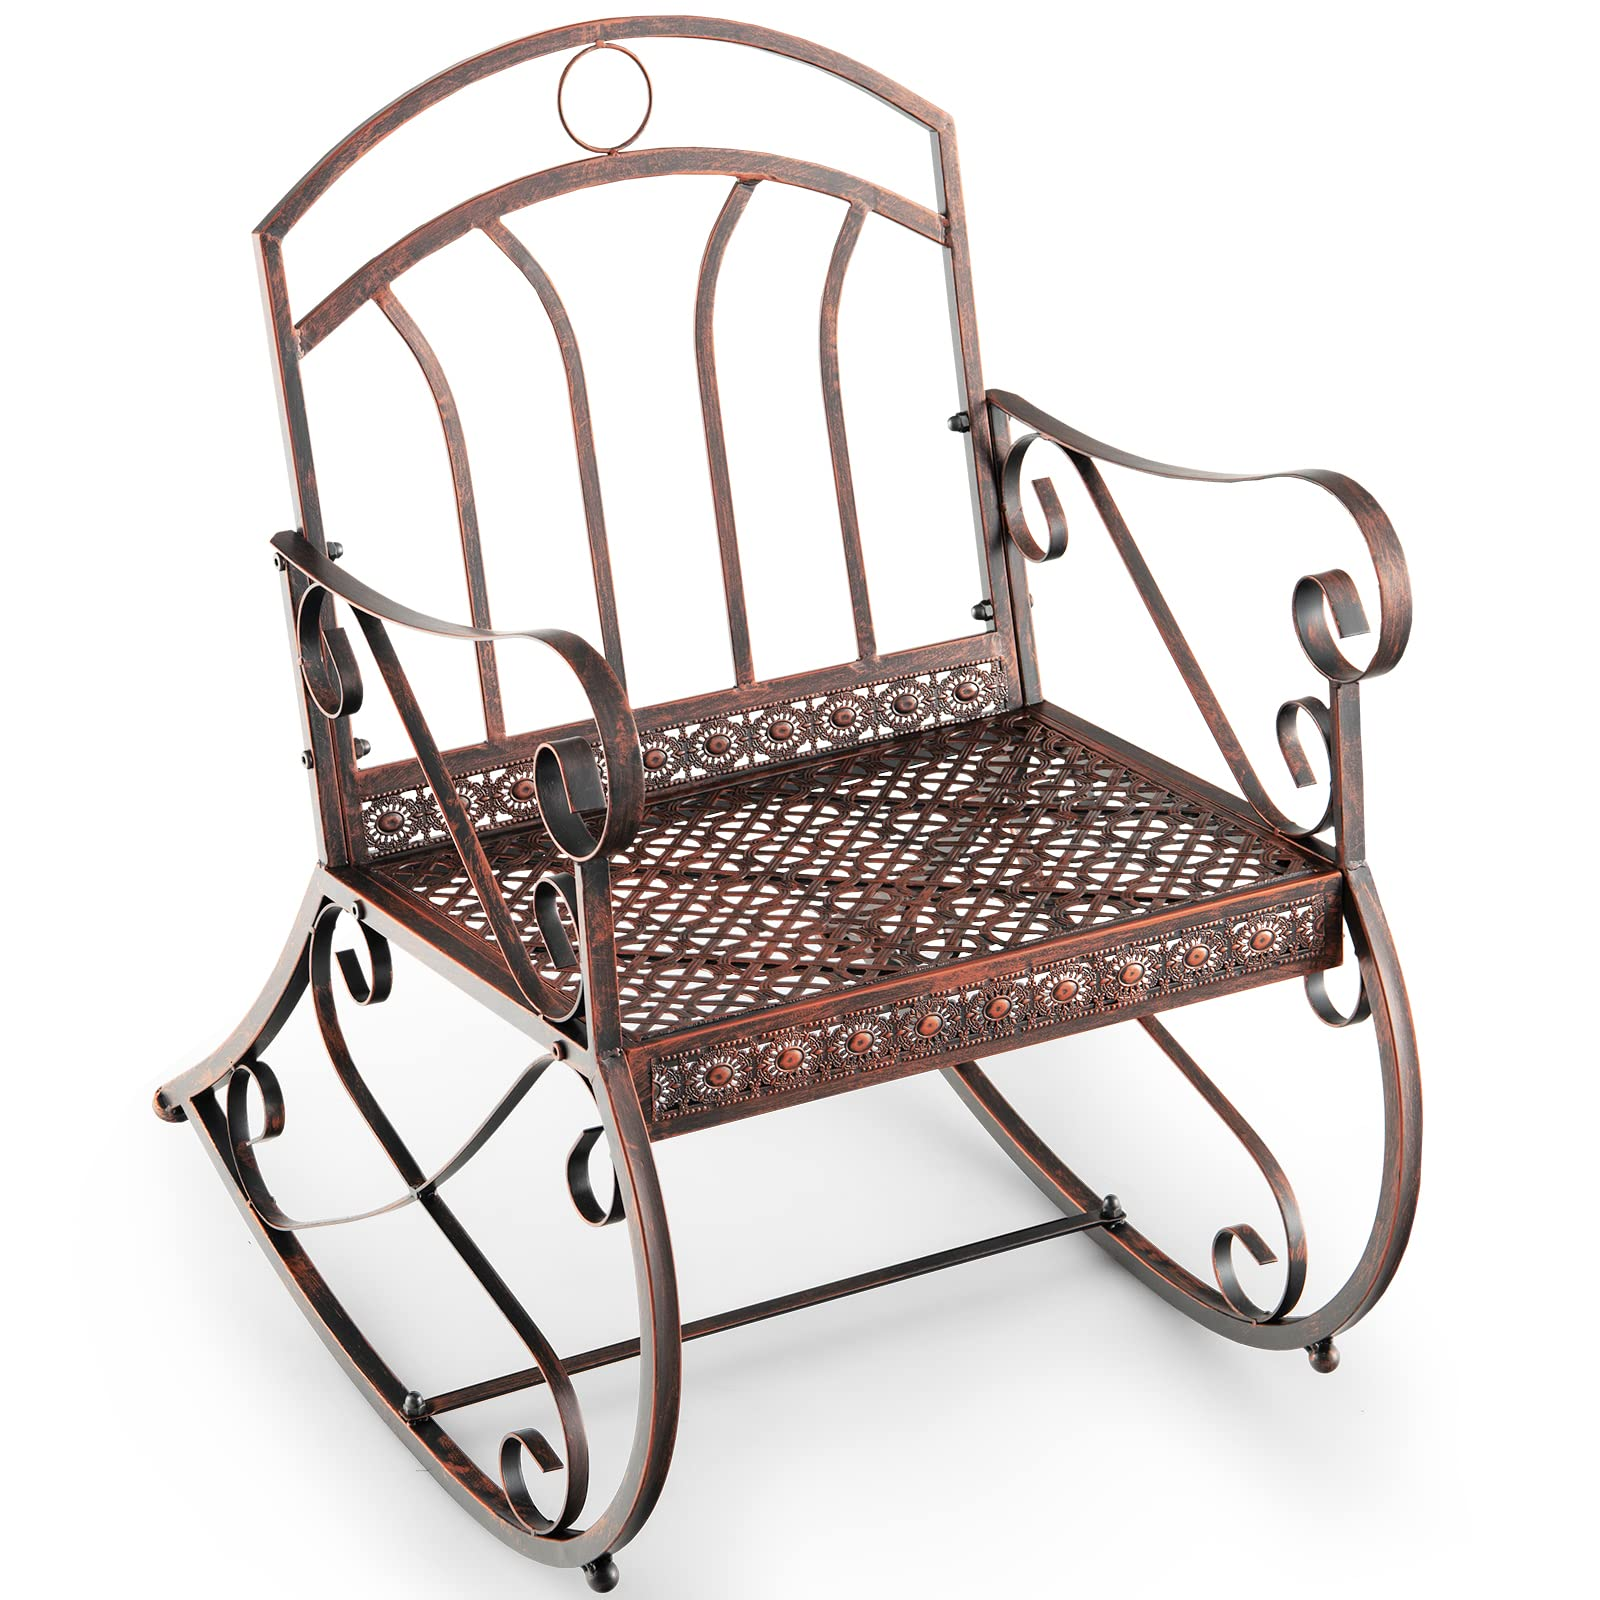 Giantex Rocking Chair Outdoor Rocker - Patio Lawn Seating Chairs